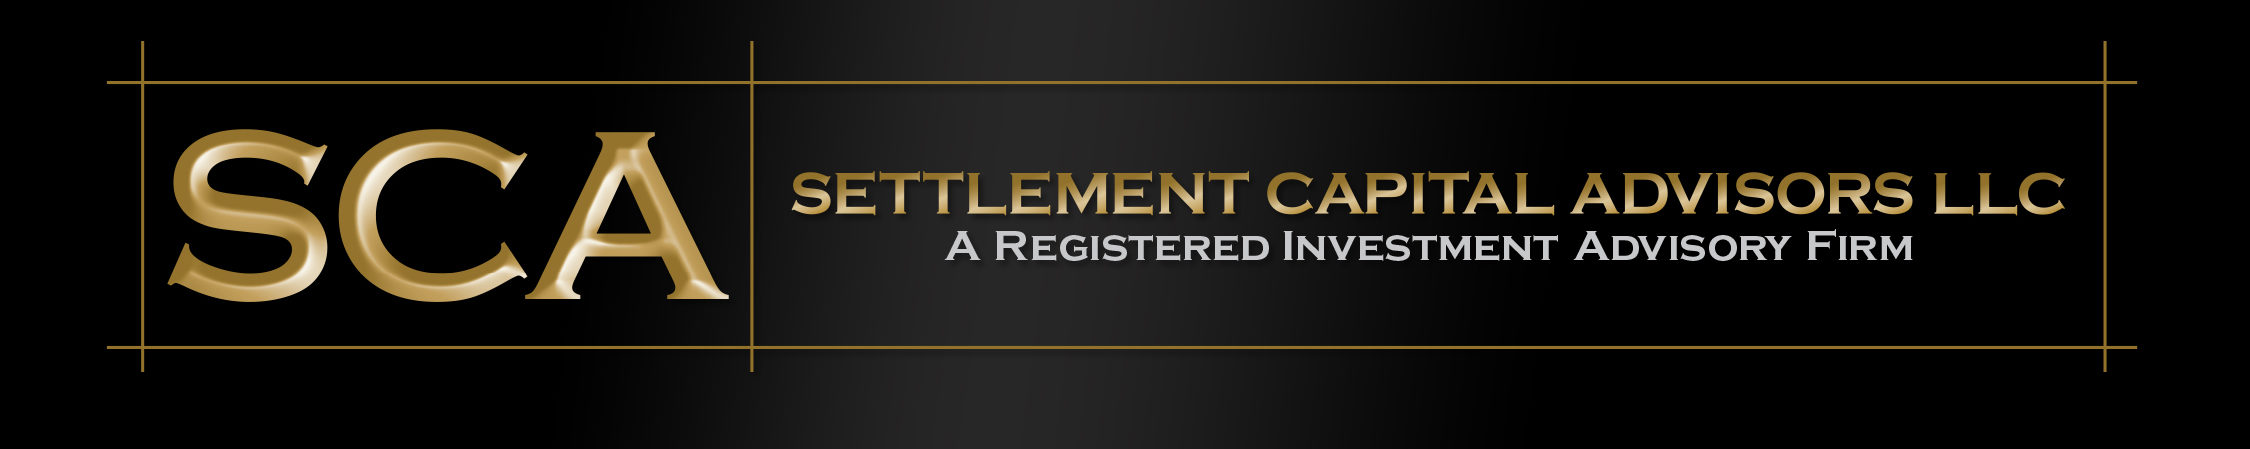 Contact SCA - Settlement Capital Advisors LLC